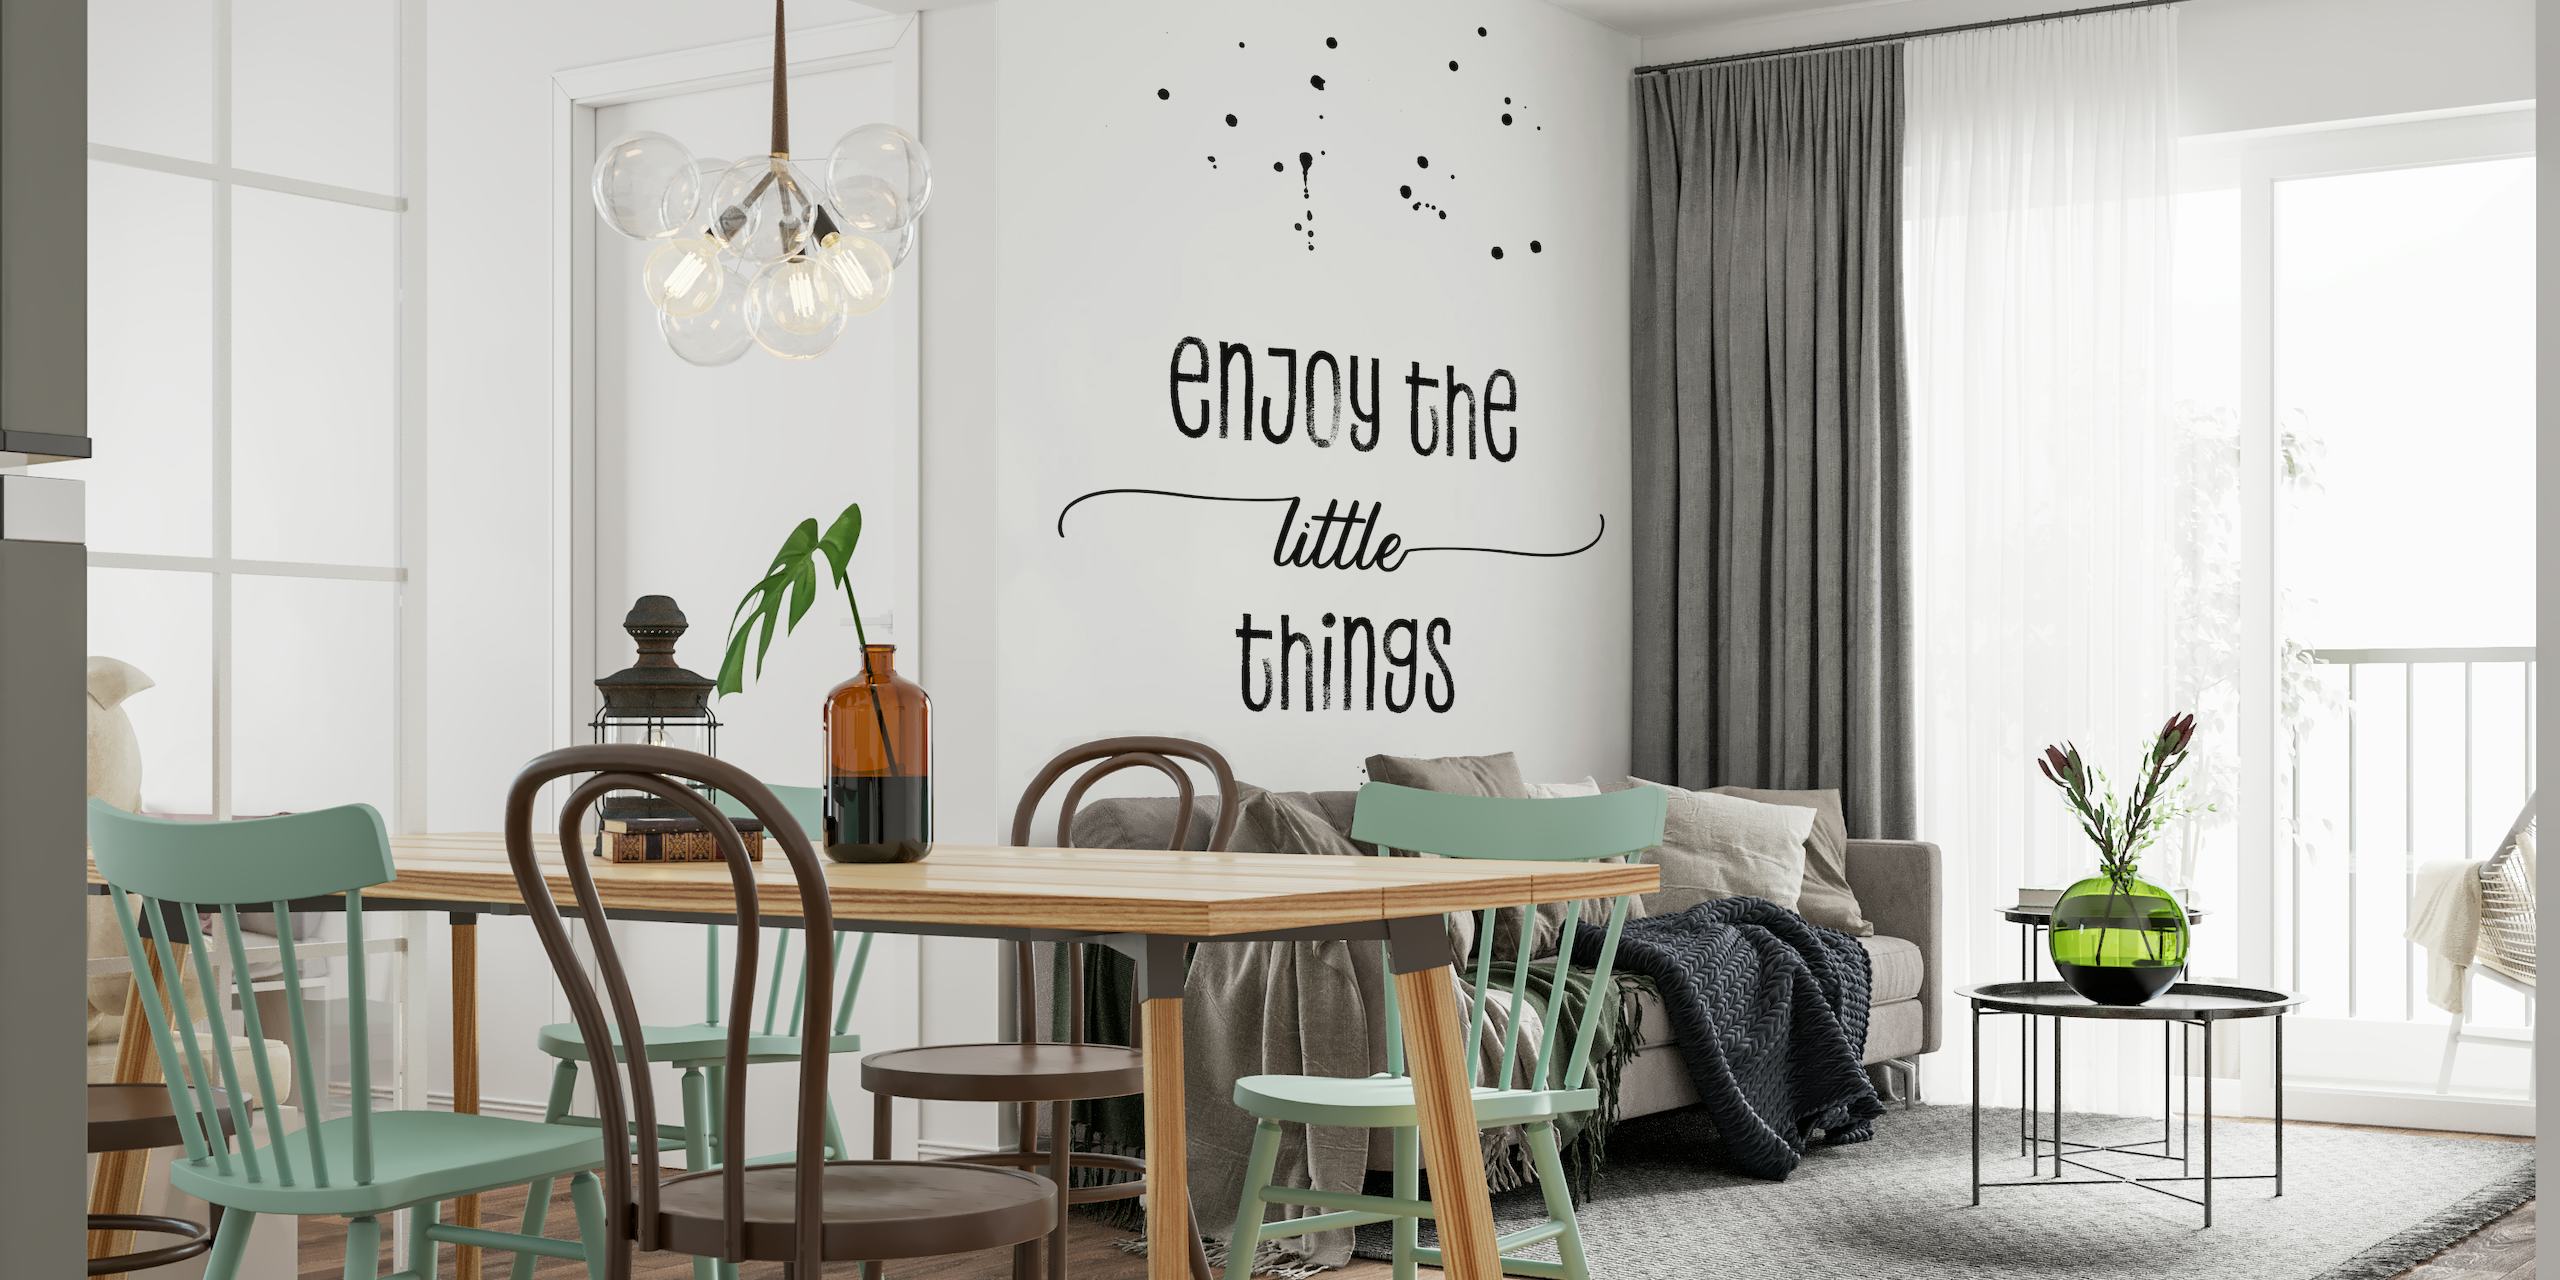 Enjoy the little things wallpaper